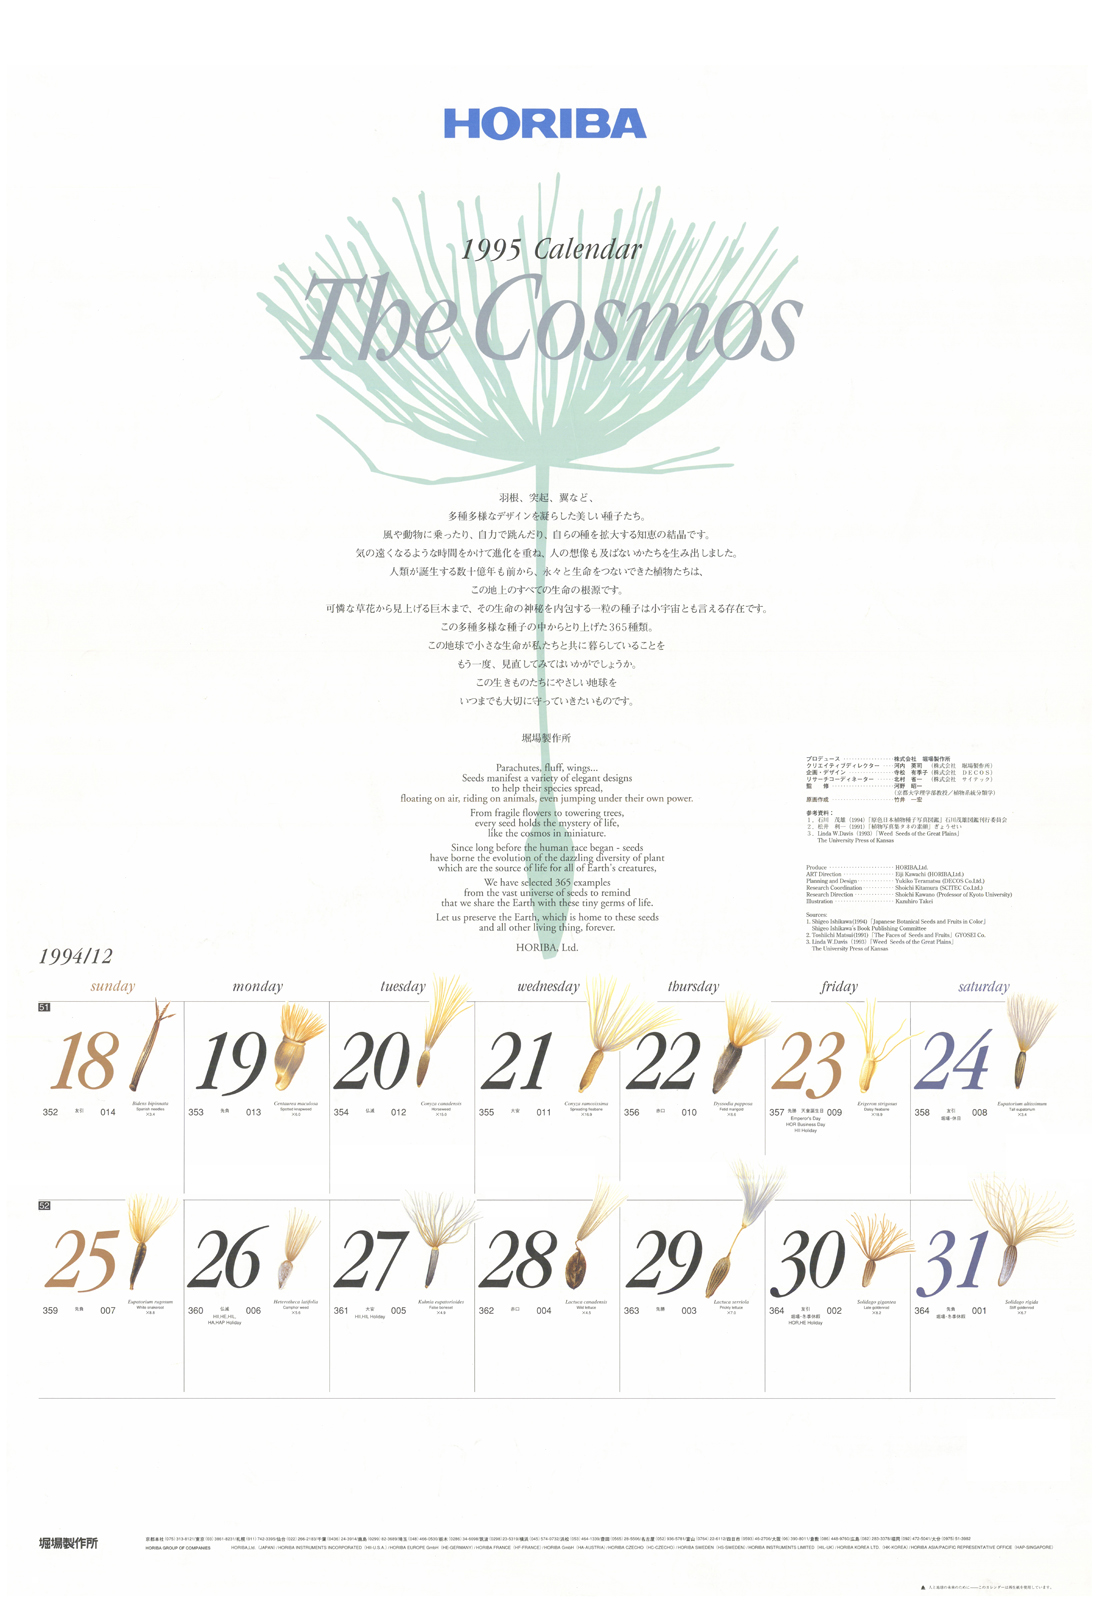 HORIBA Calendar 1995